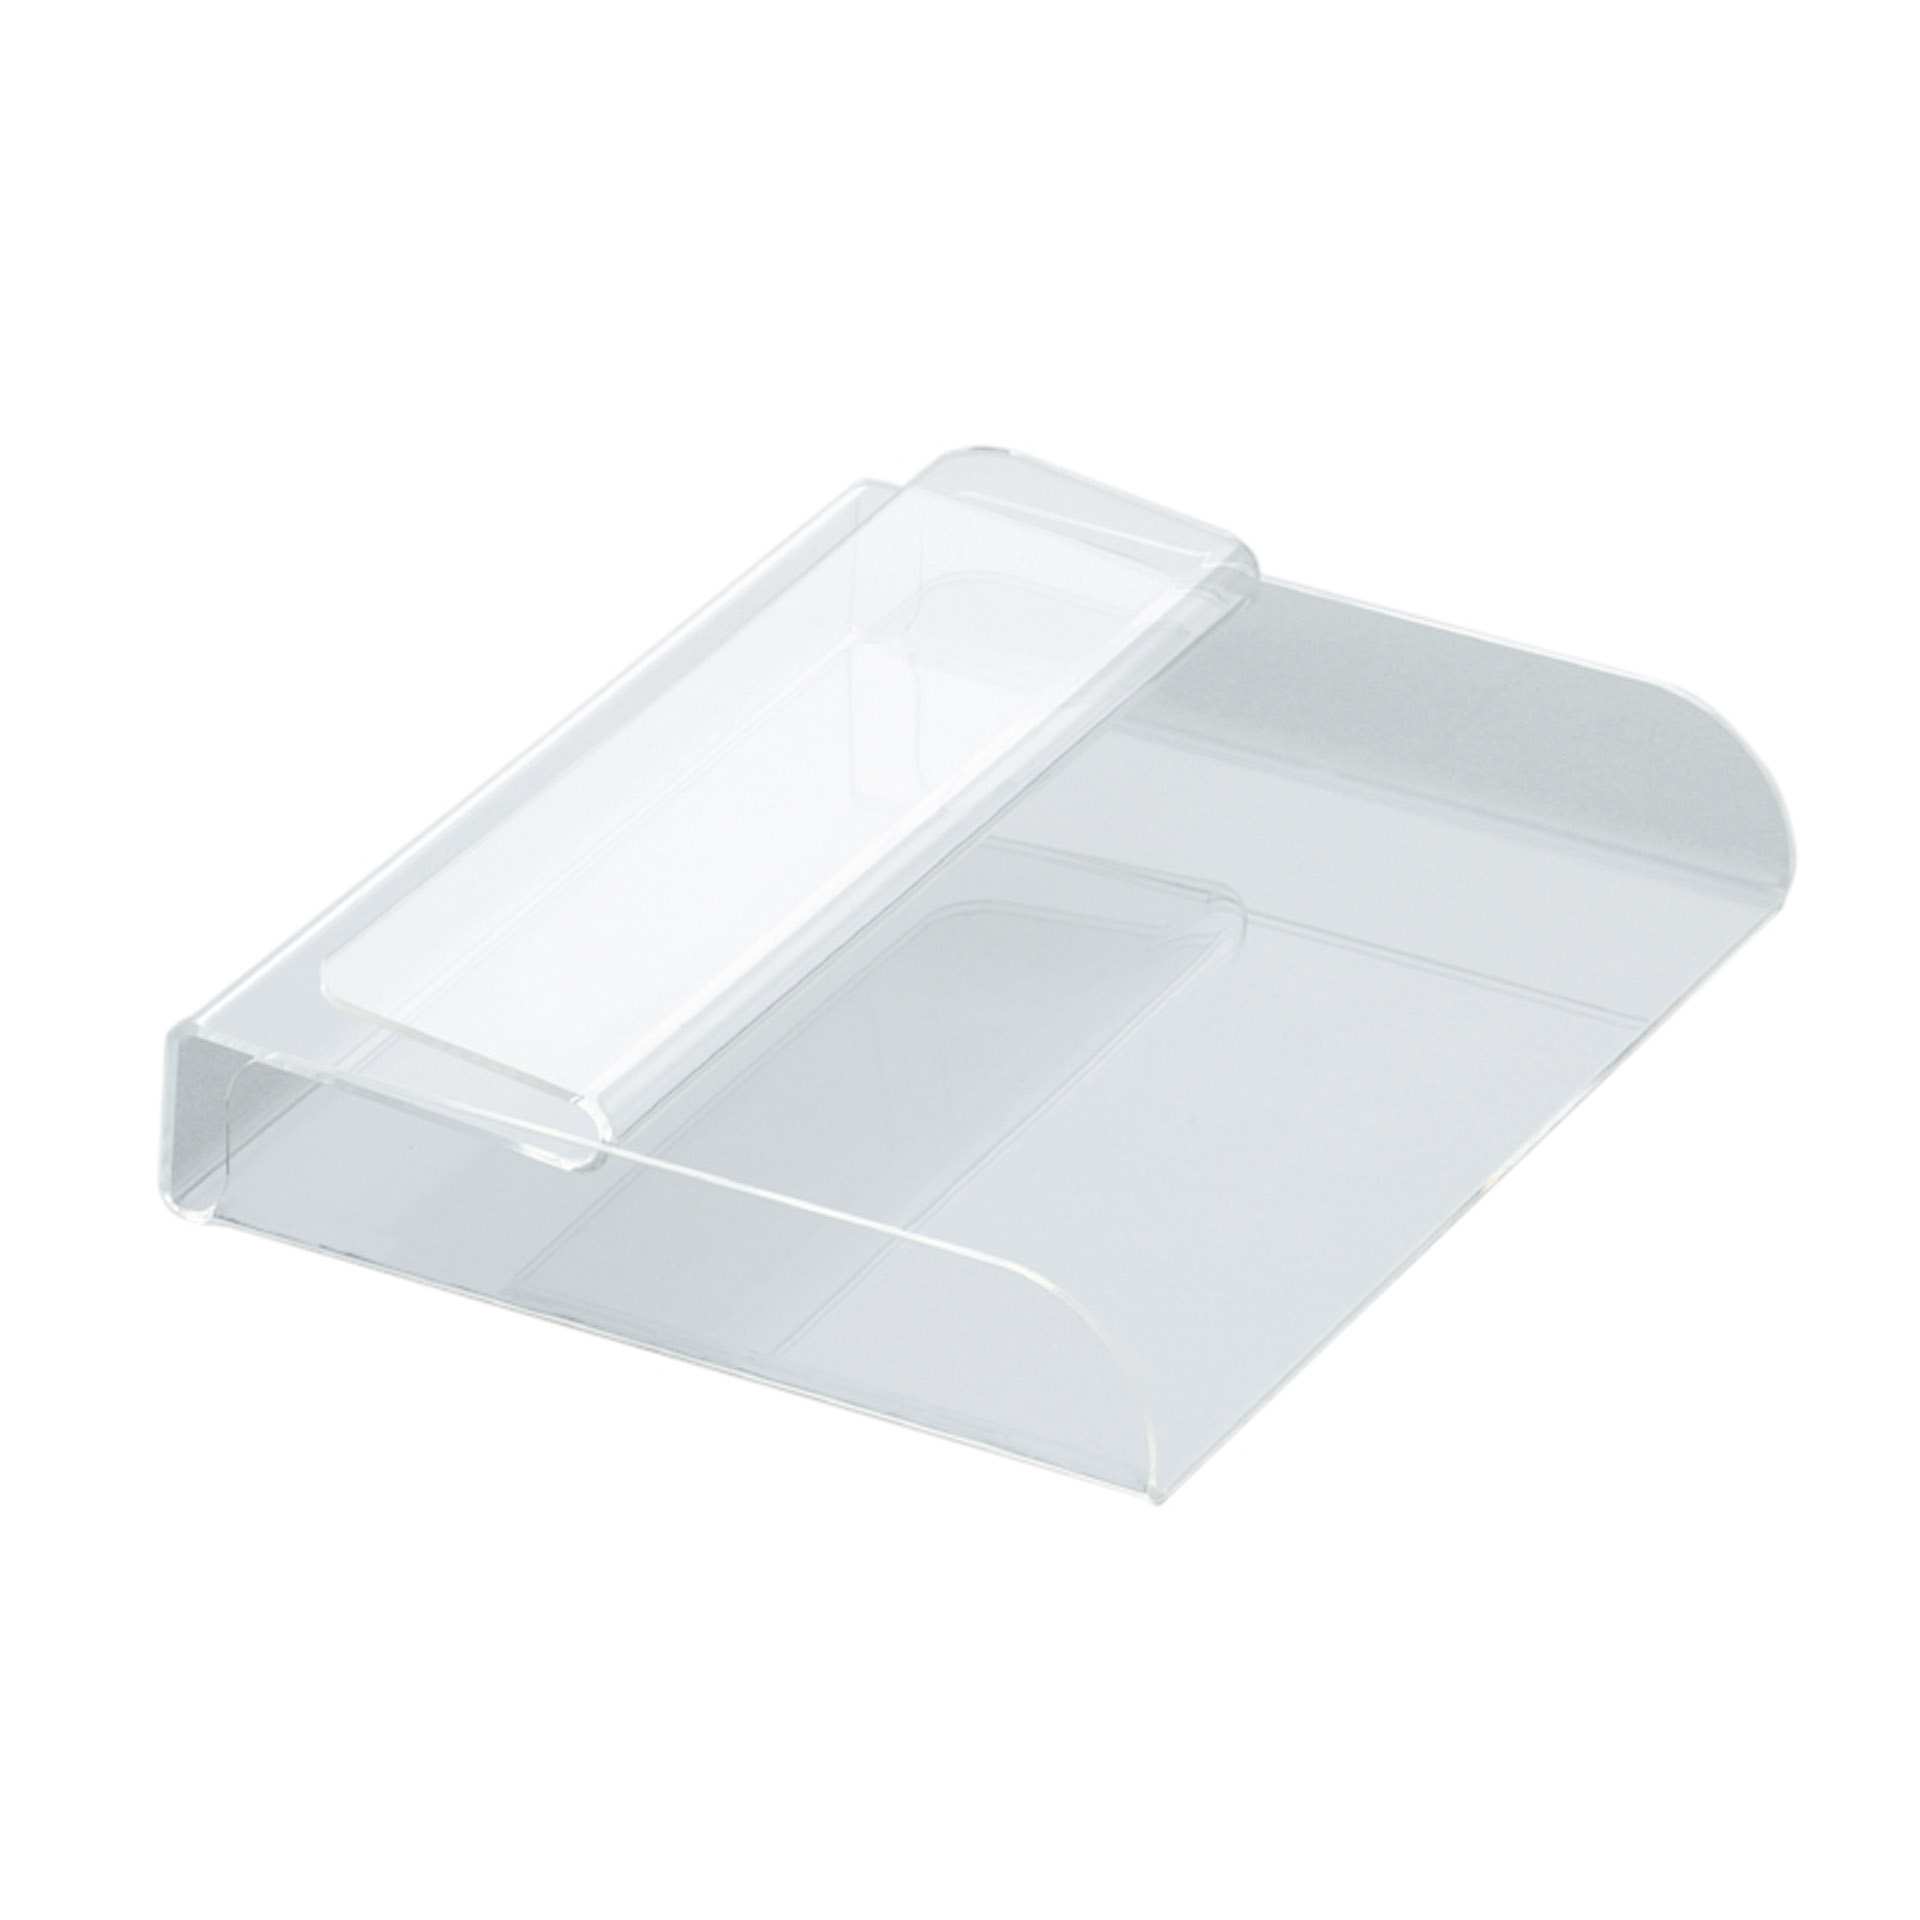 Fettpapierhalter - selbstklemmend - transparent - Abm. 40,0 x 25,0 x 6,5 cm - PMMA - 172003-C